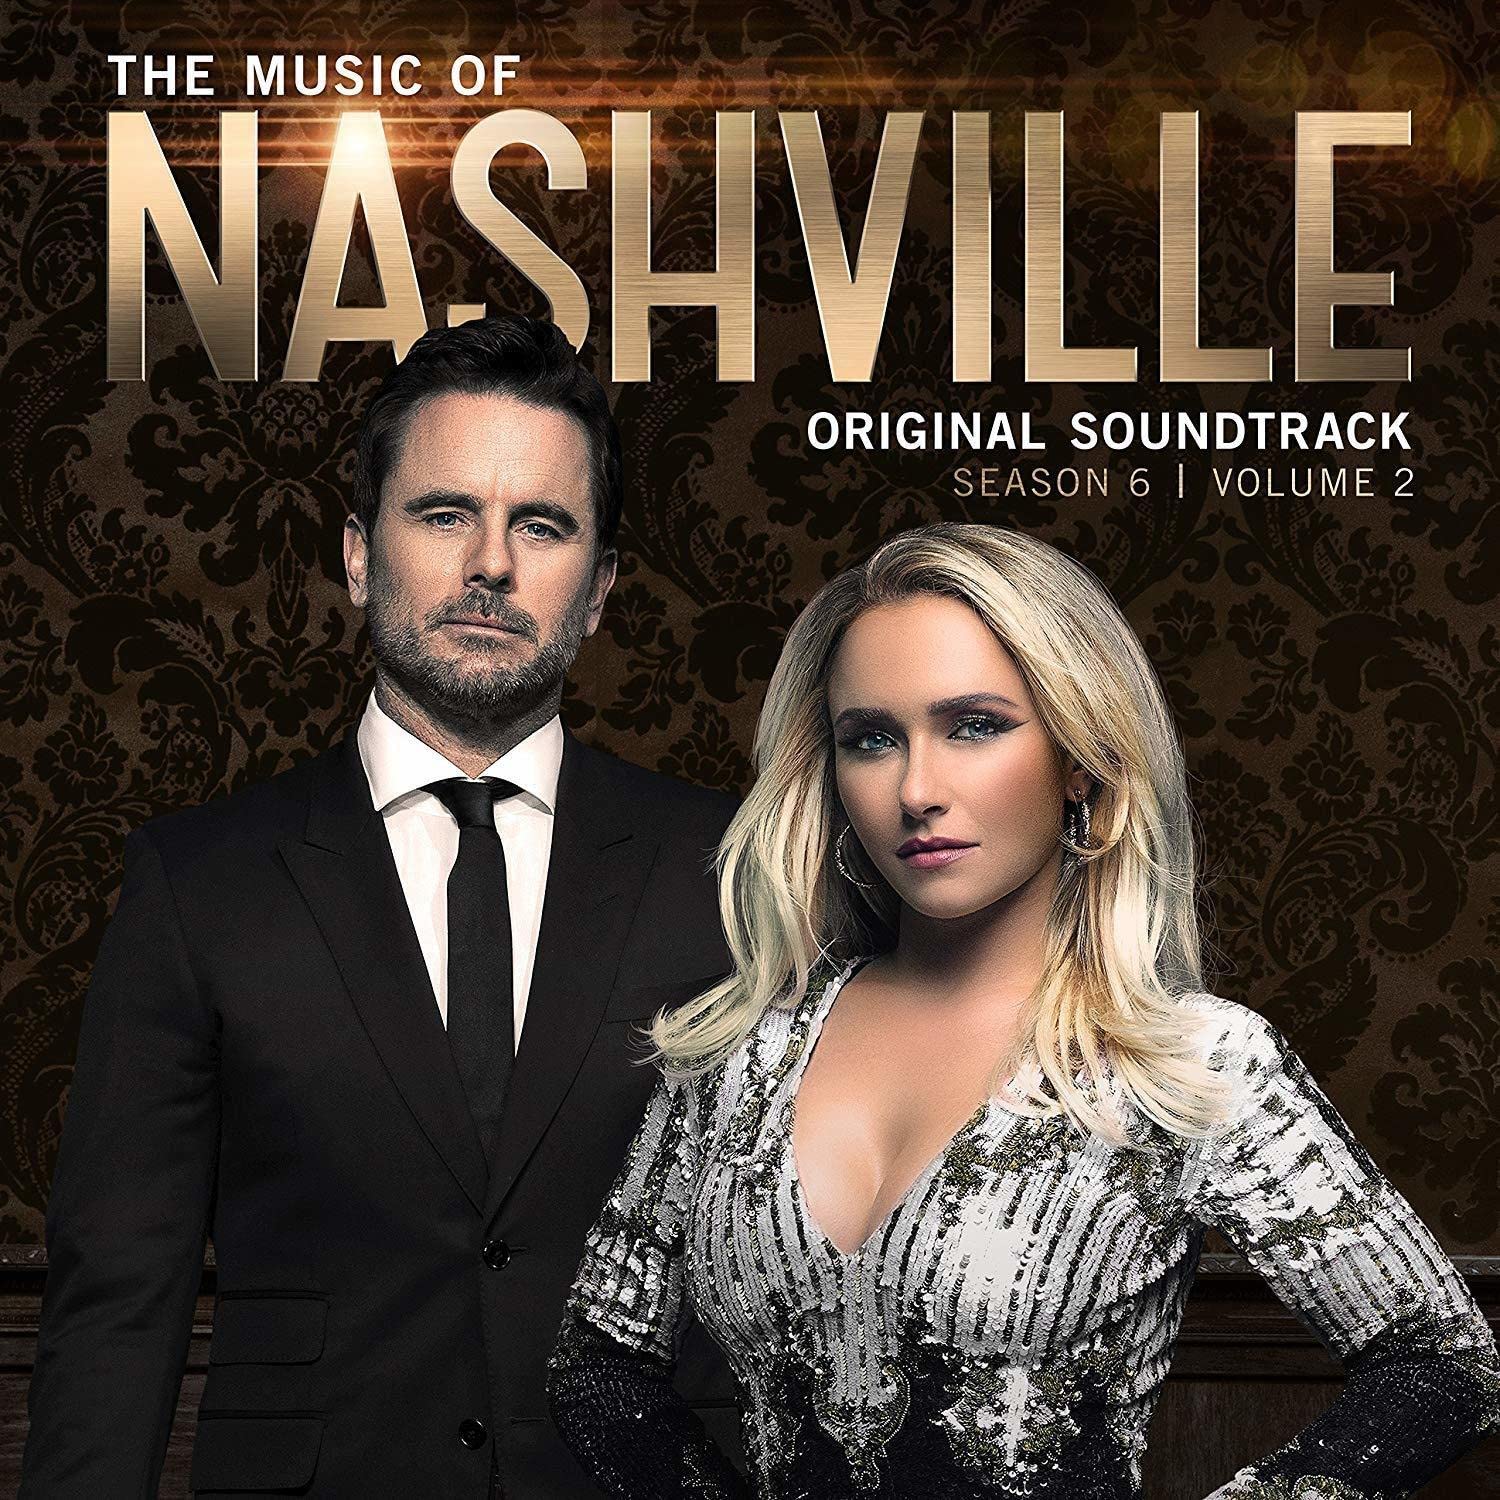 The Music Of Nashville: Original Soundtrack Season 6 Volume 2